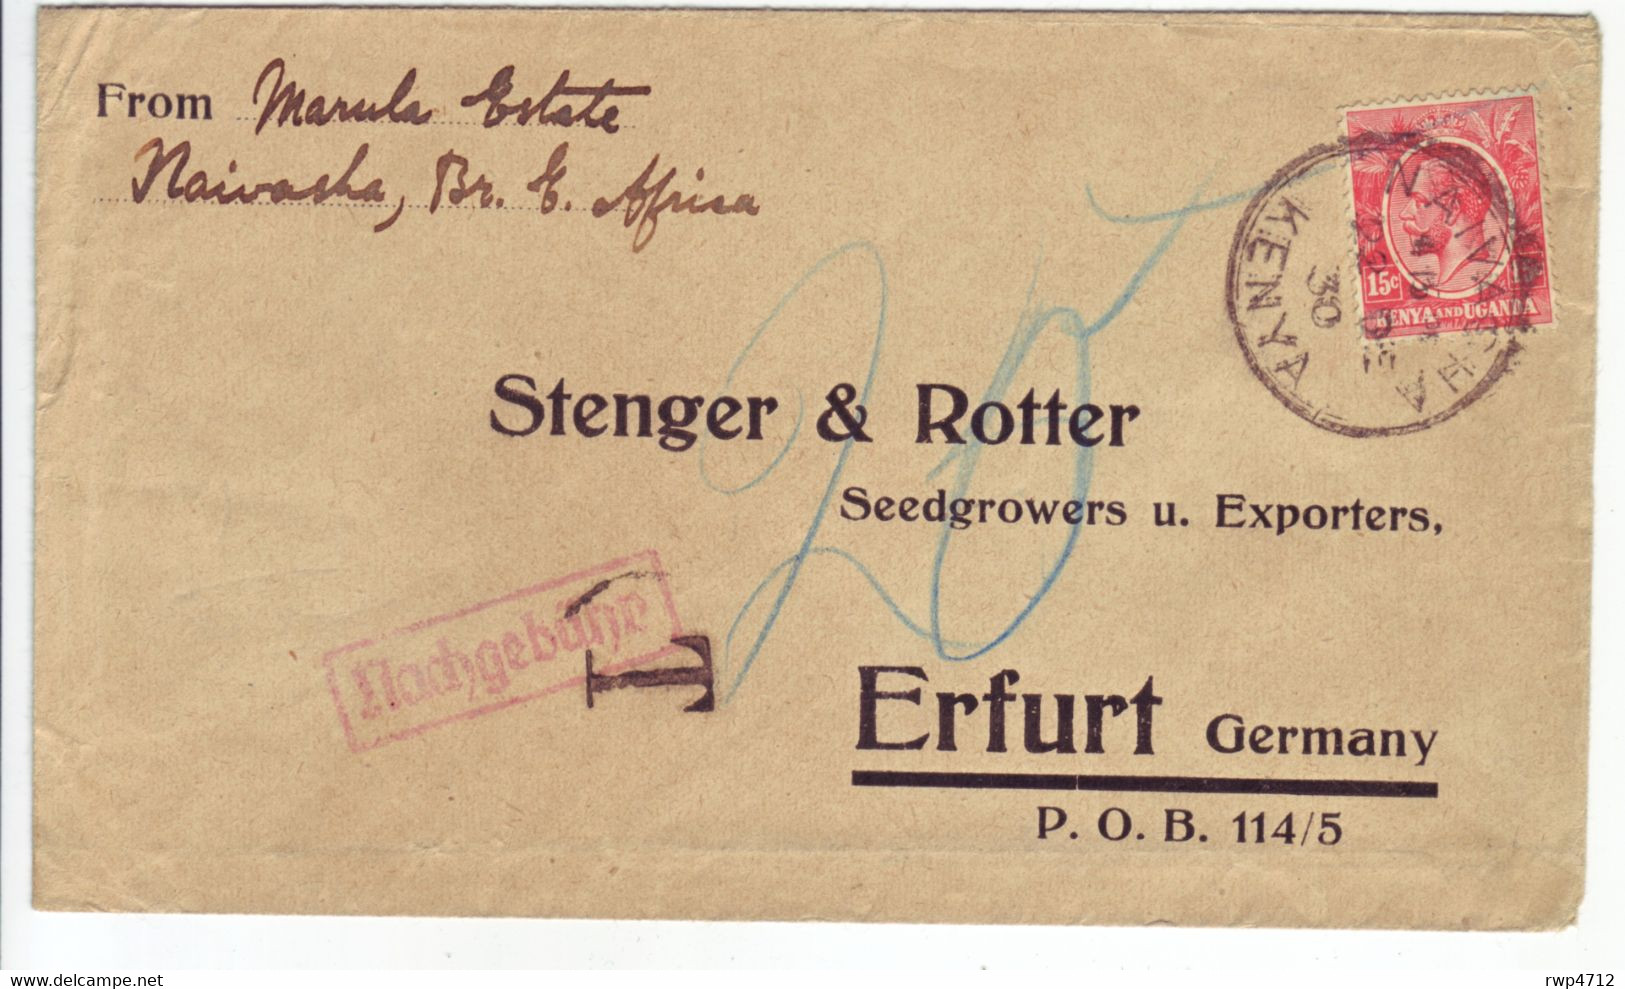 KENIA & UGANDA  Brief Mit Nachgebühr  Cover Lettre Naivasha 1930 To Germany  Postage Due - Kenya & Oeganda